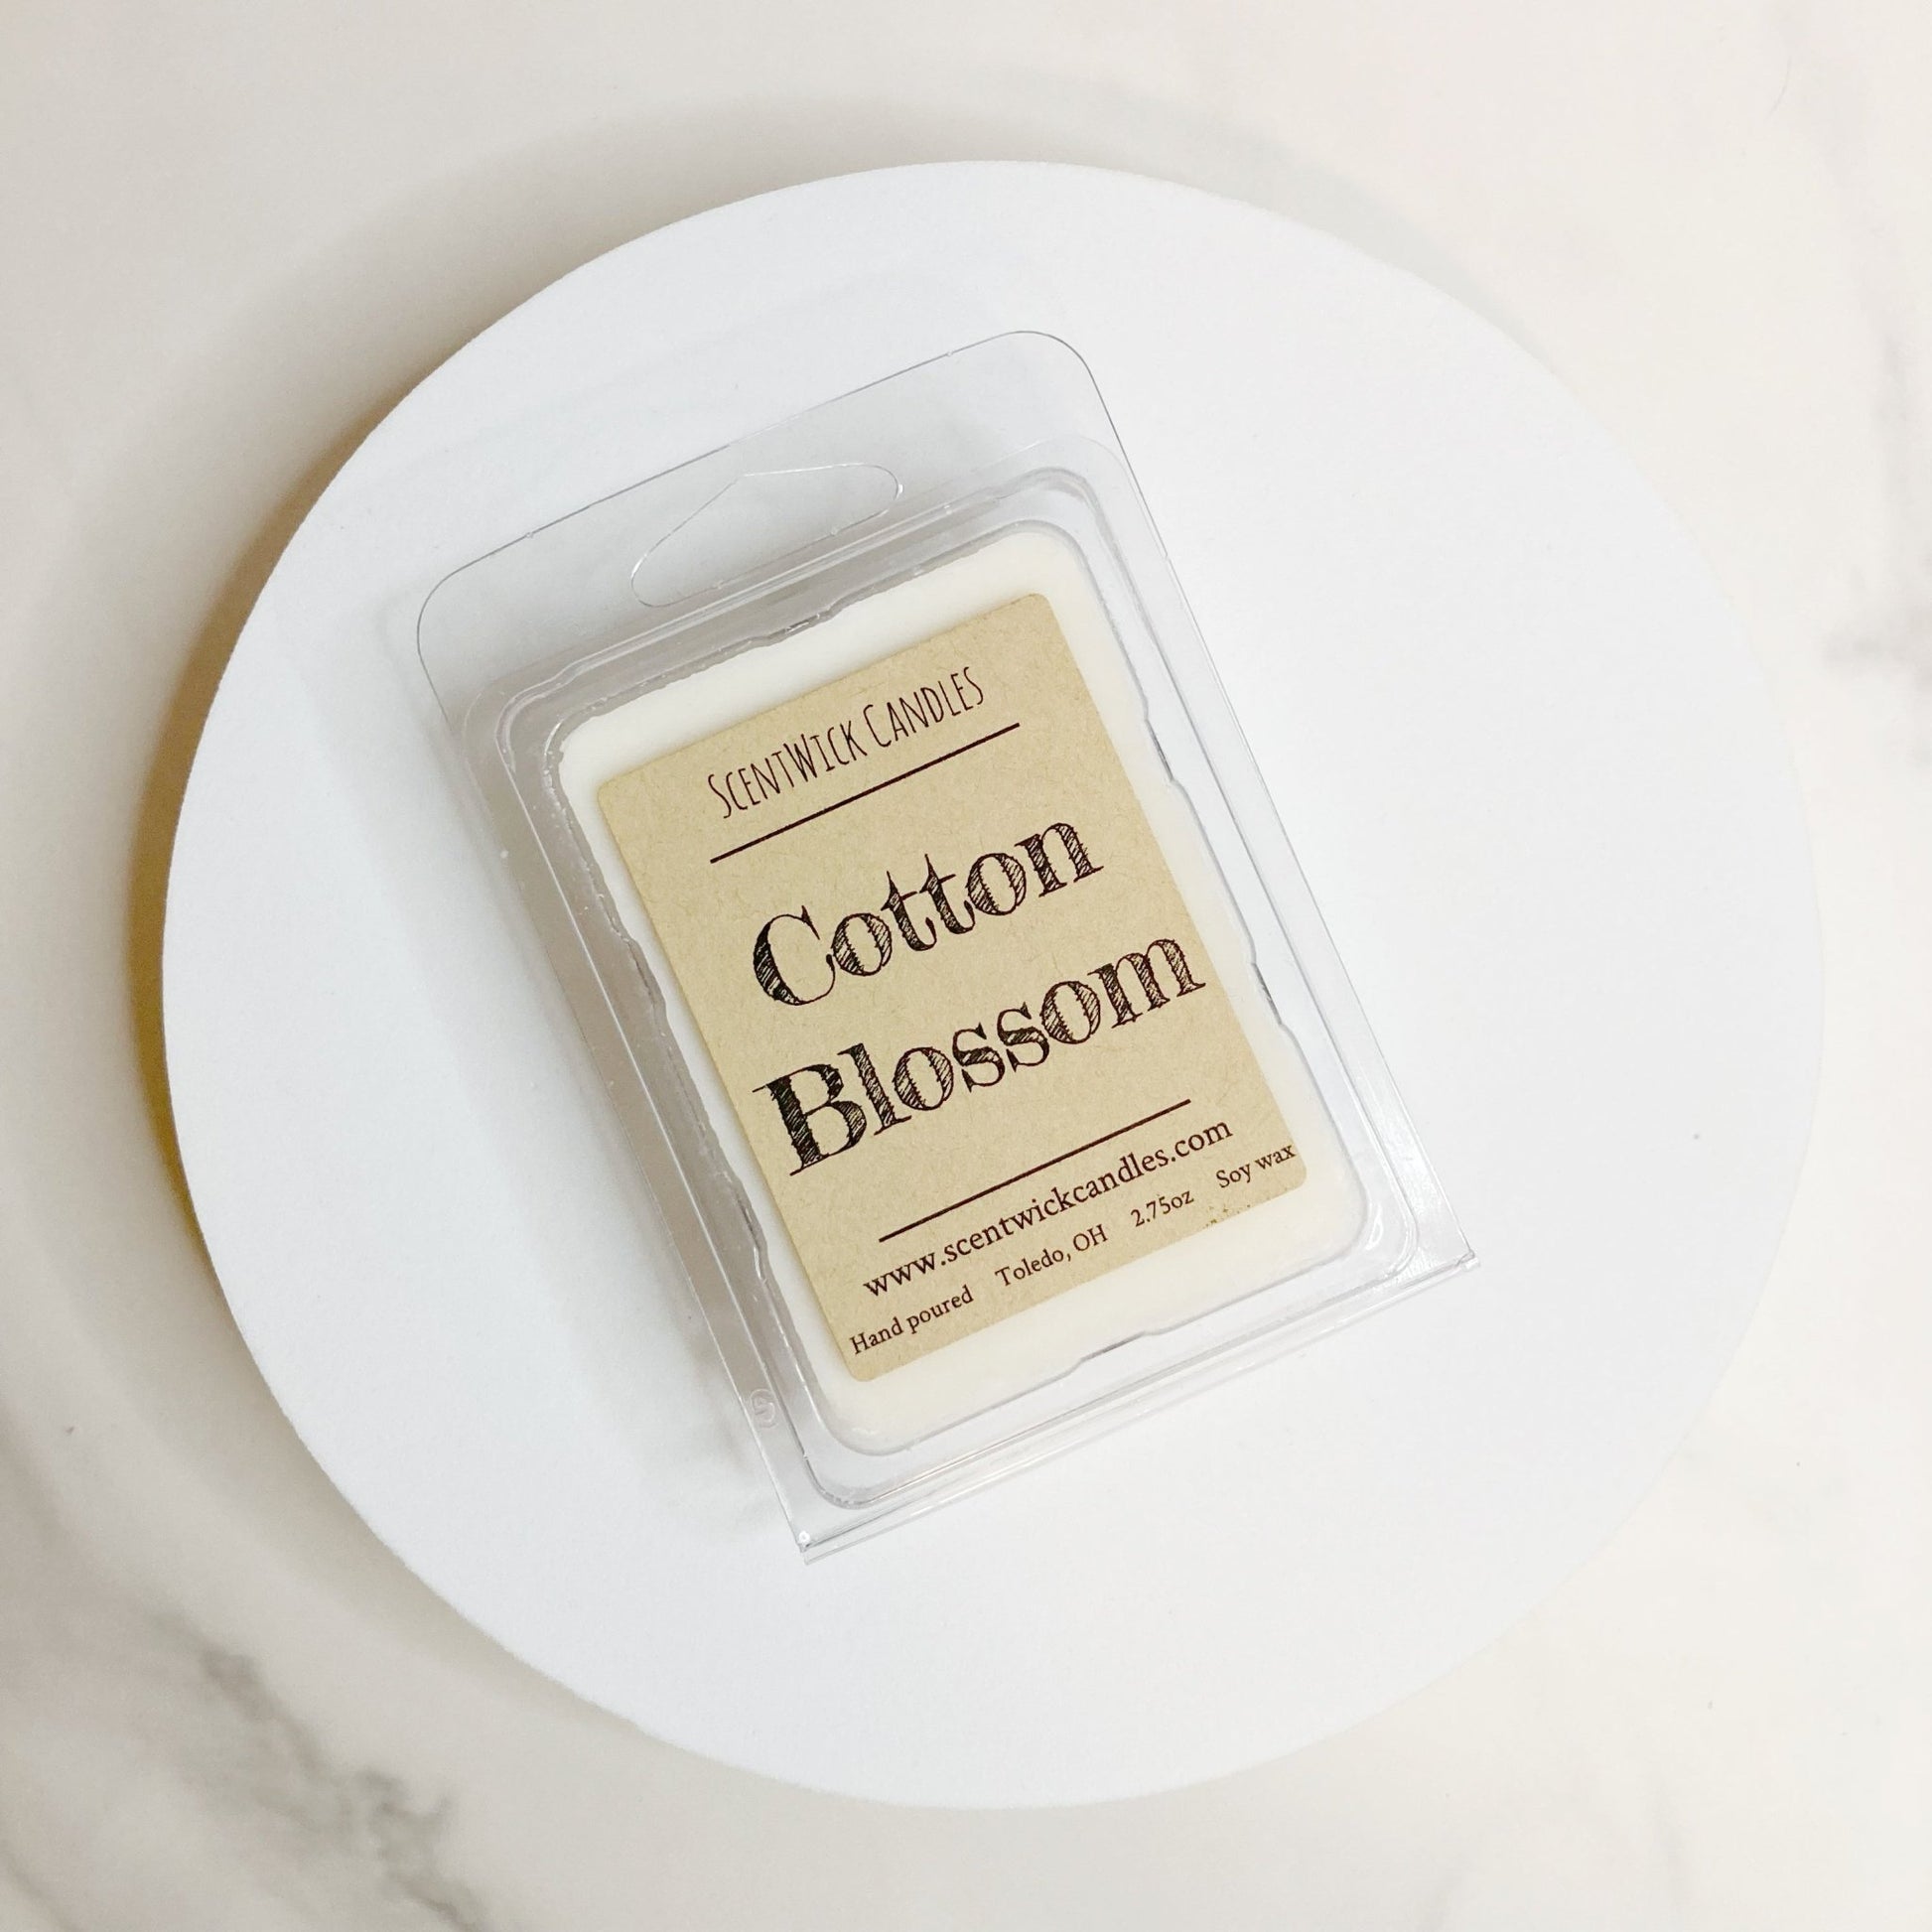 Cotton Blossom Wax Melt - ScentWick Candles